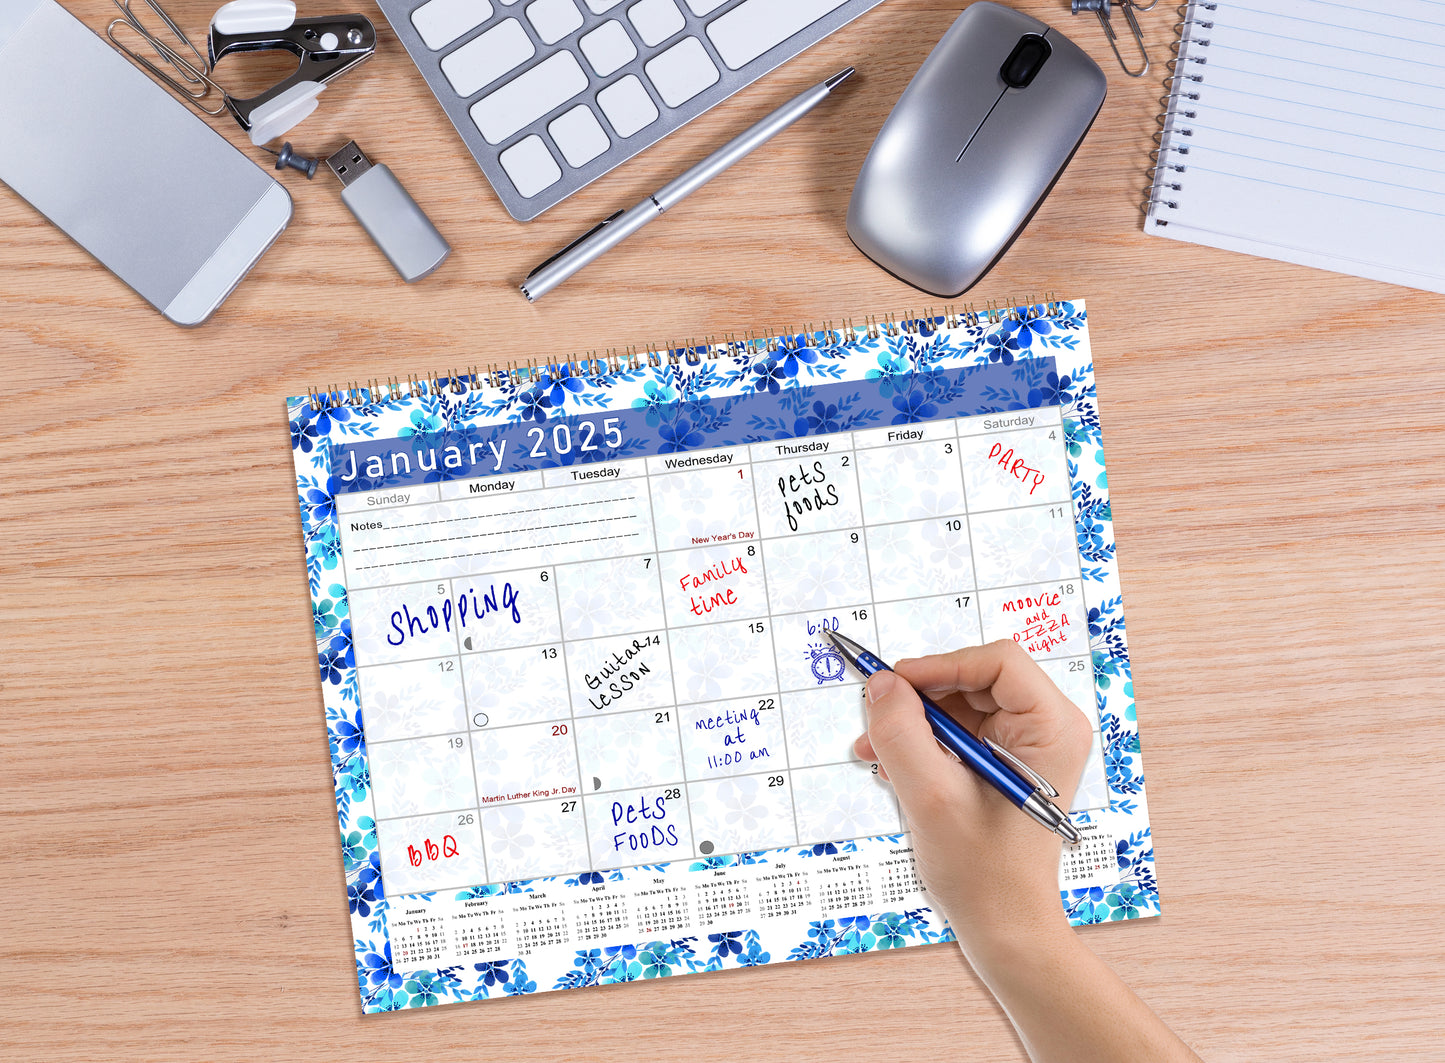 2025 Monthly Desktop/Wall Calendar/Planner - Habit Tracker - (Edition #22)